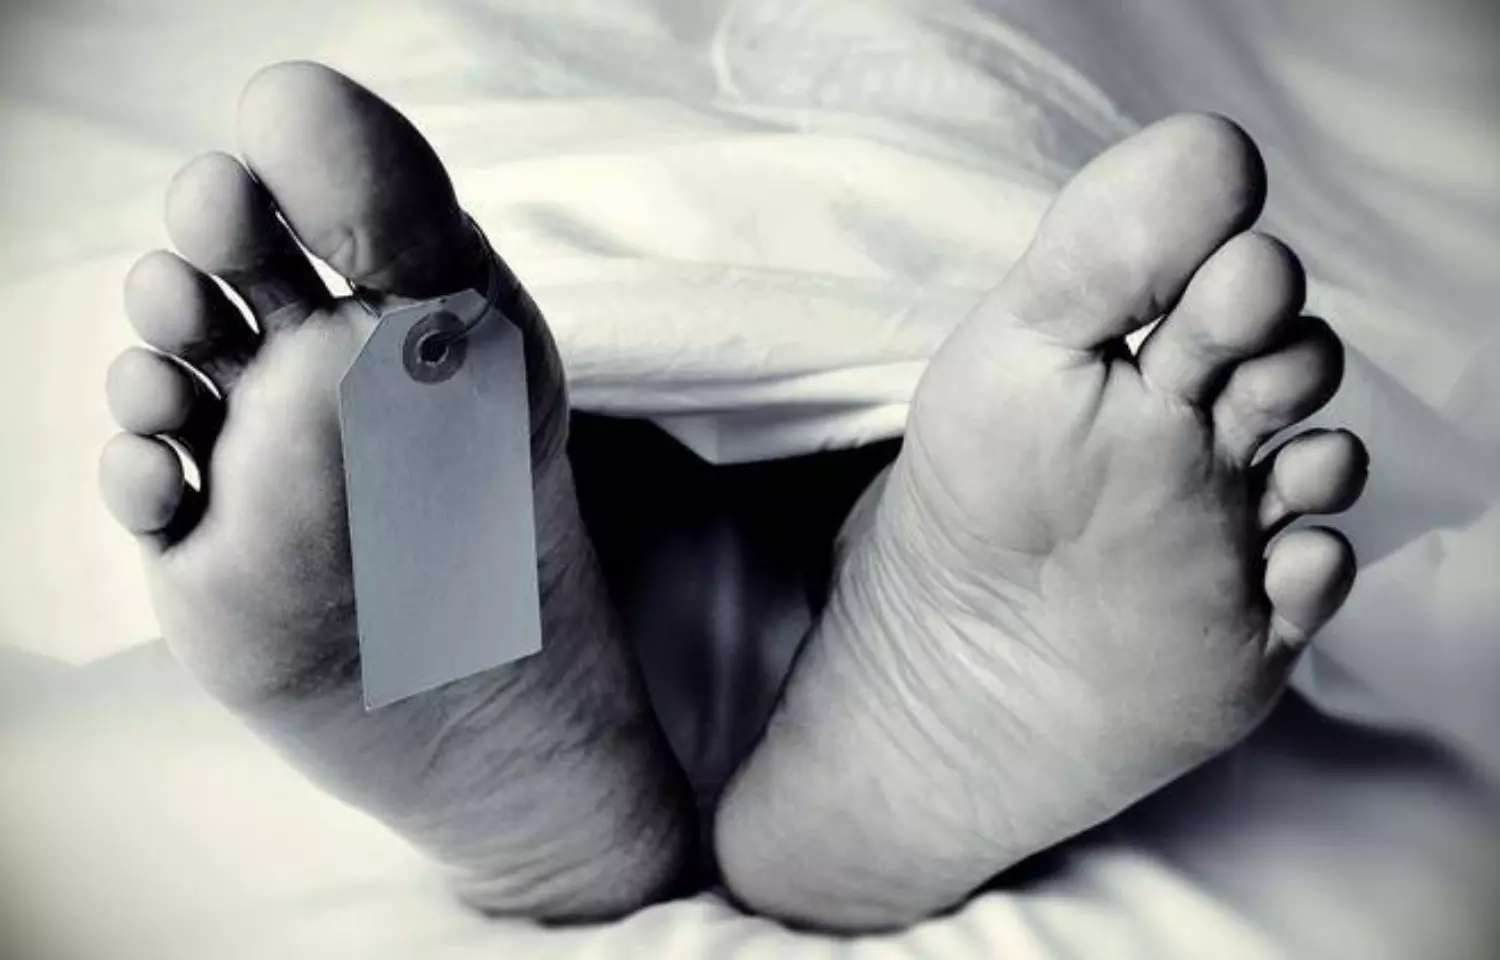 Karnataka: Bodies of 2 COVID victims found rotting in ESIC mortuary